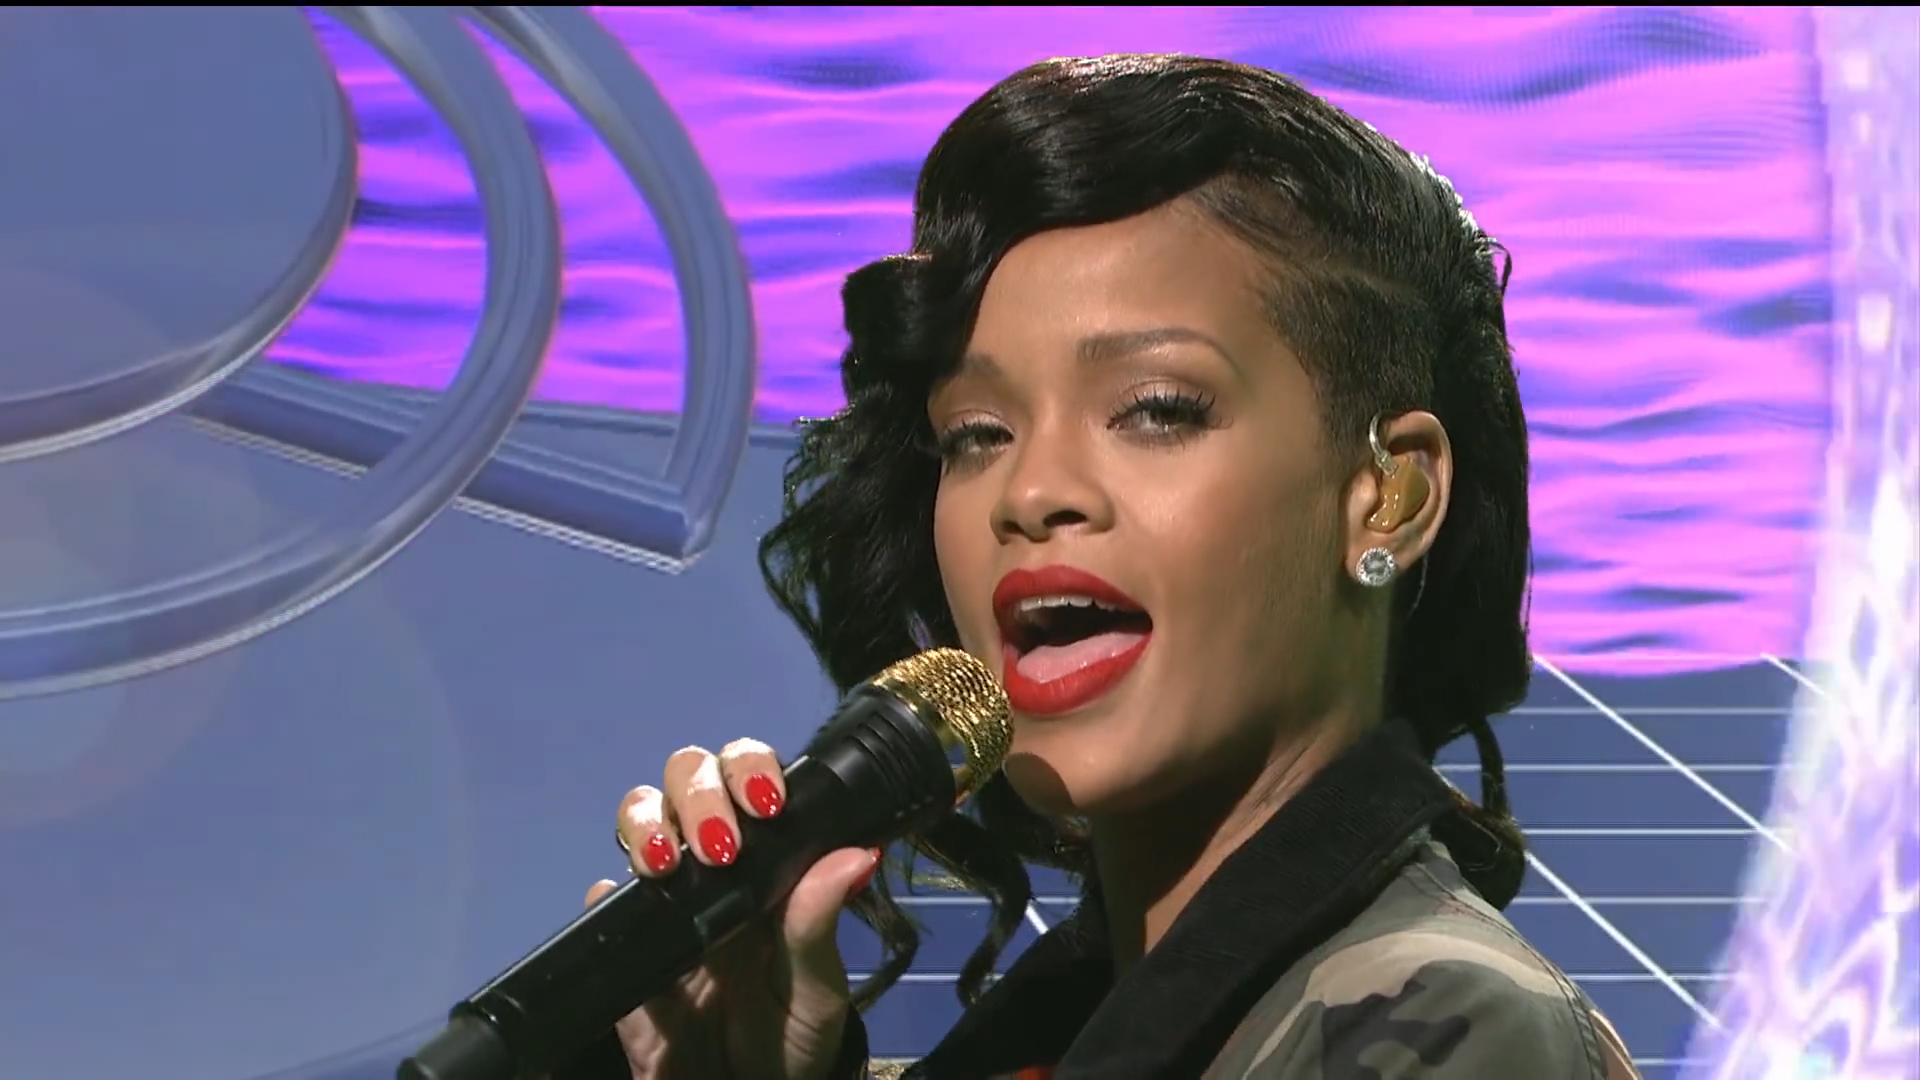 Rihanna preforming "Diamonds" at SNL.